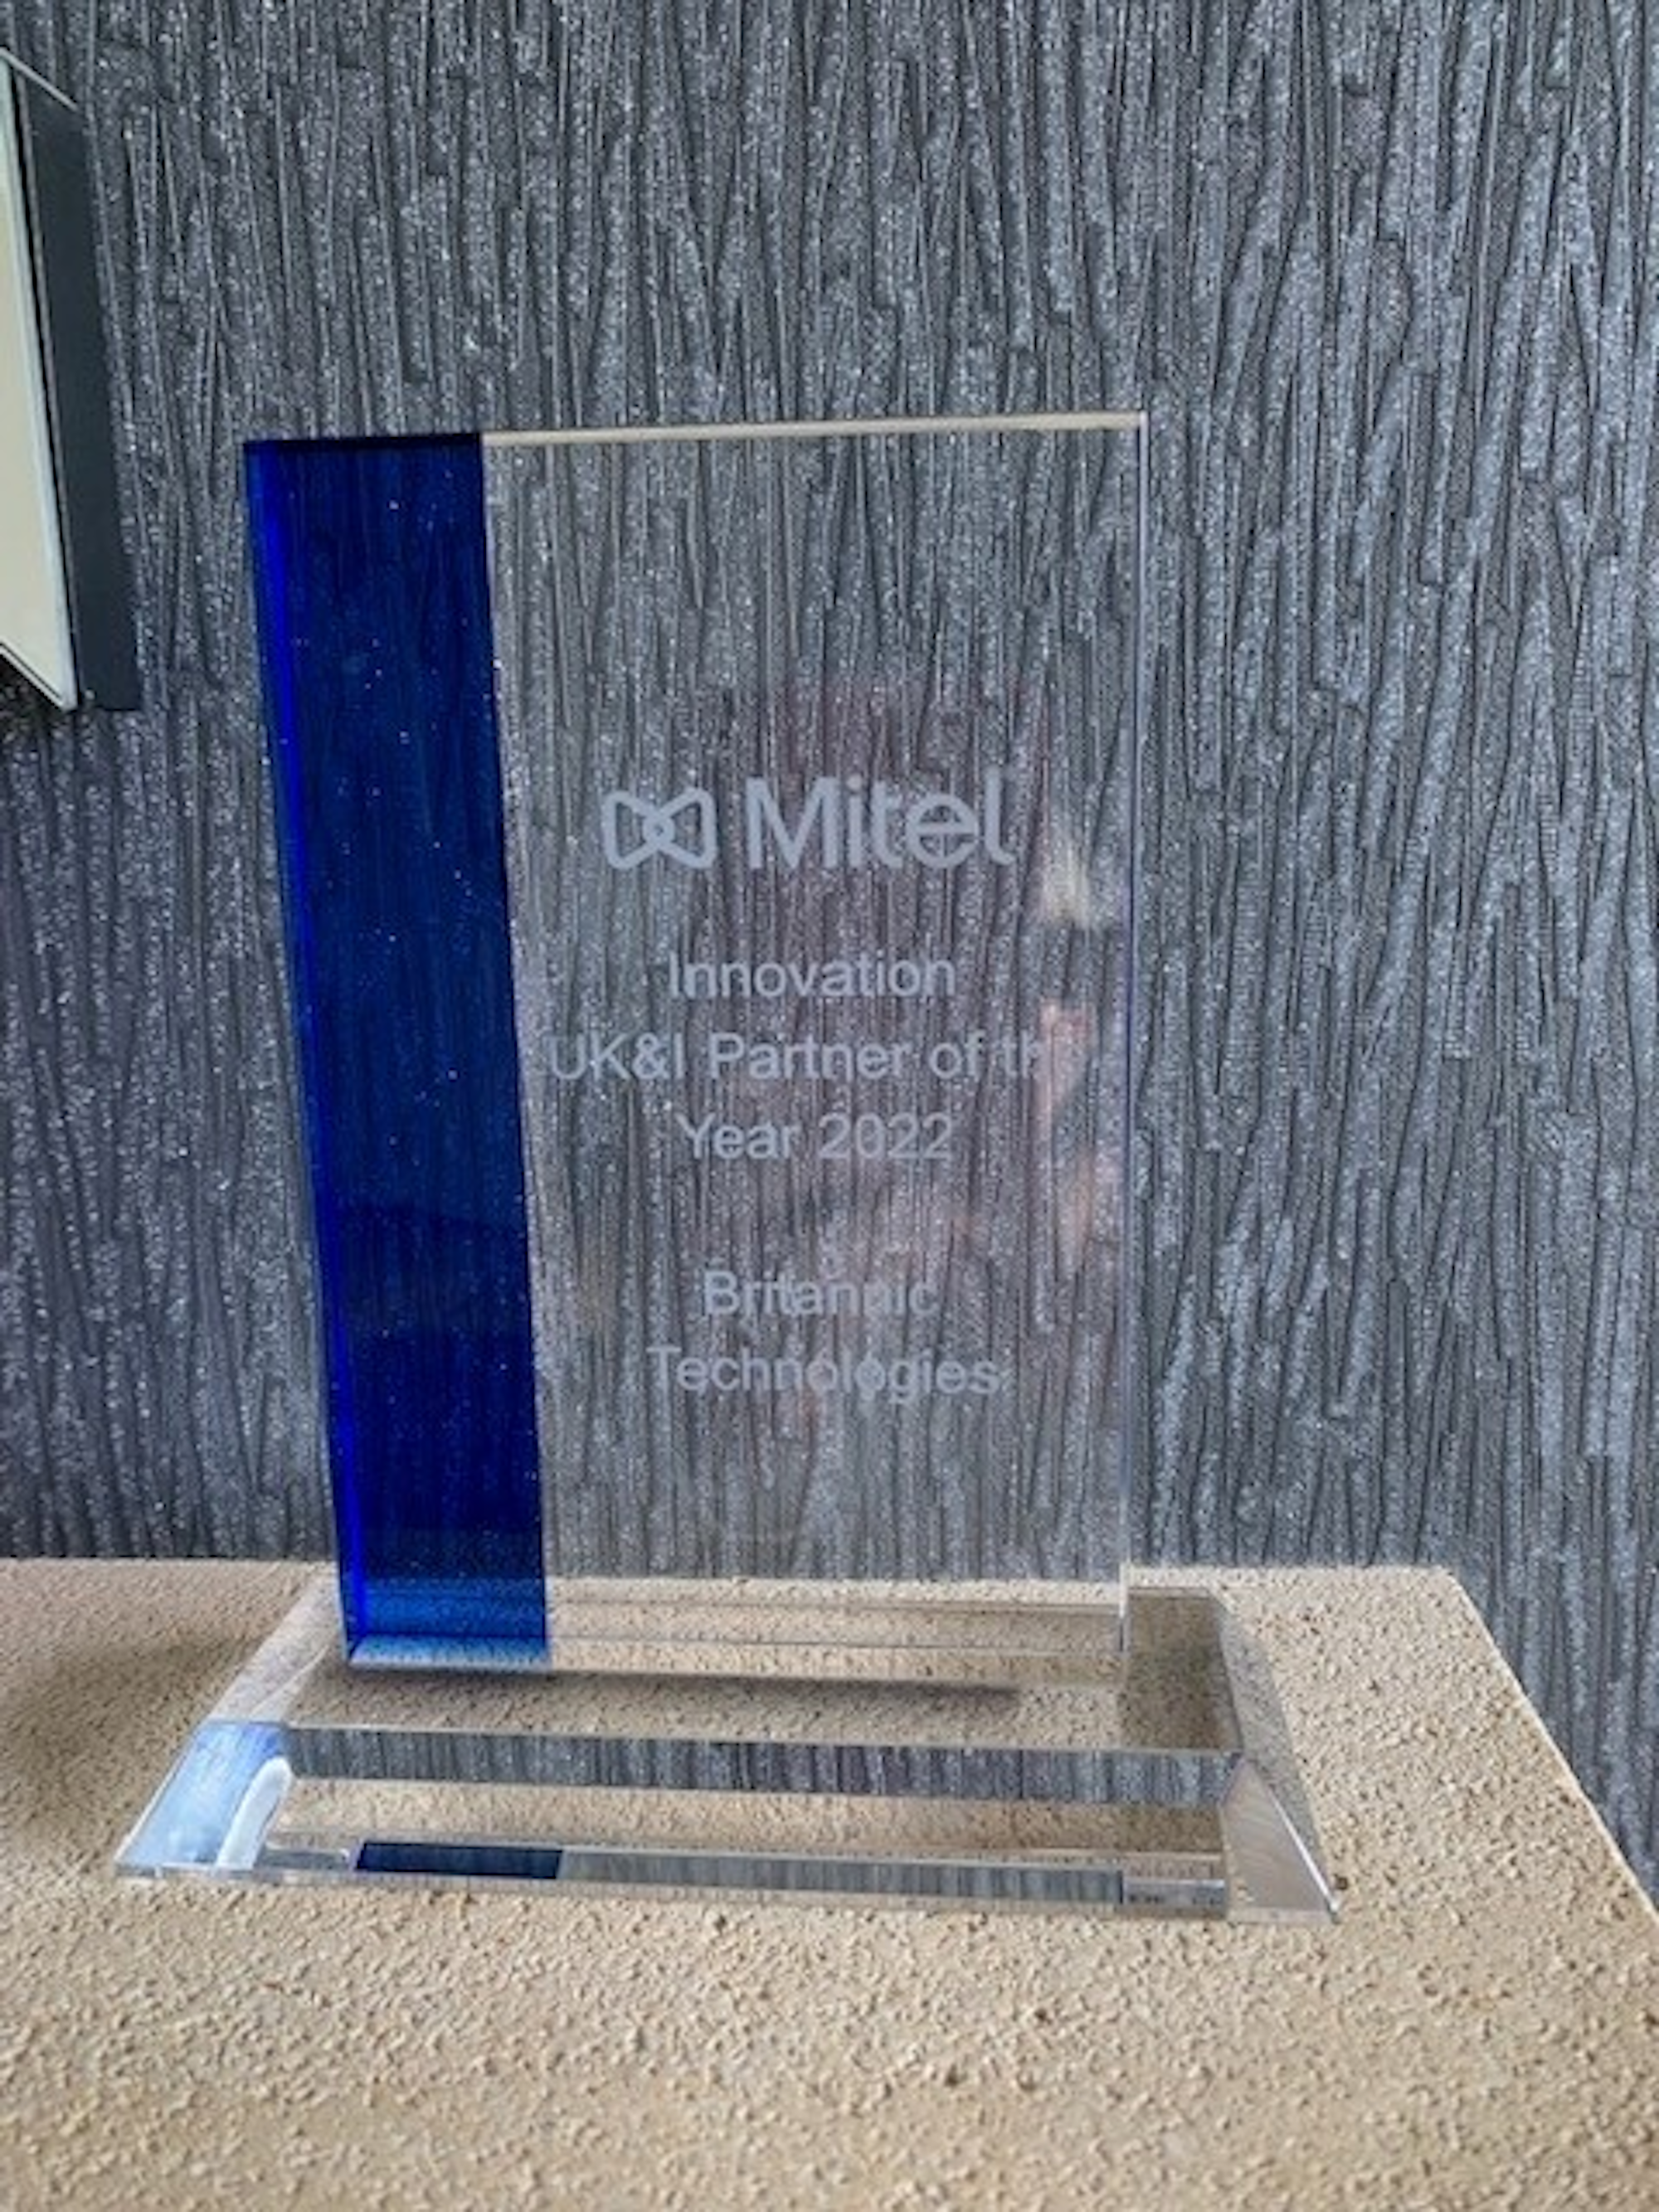 Award Win Mitel & Britannic